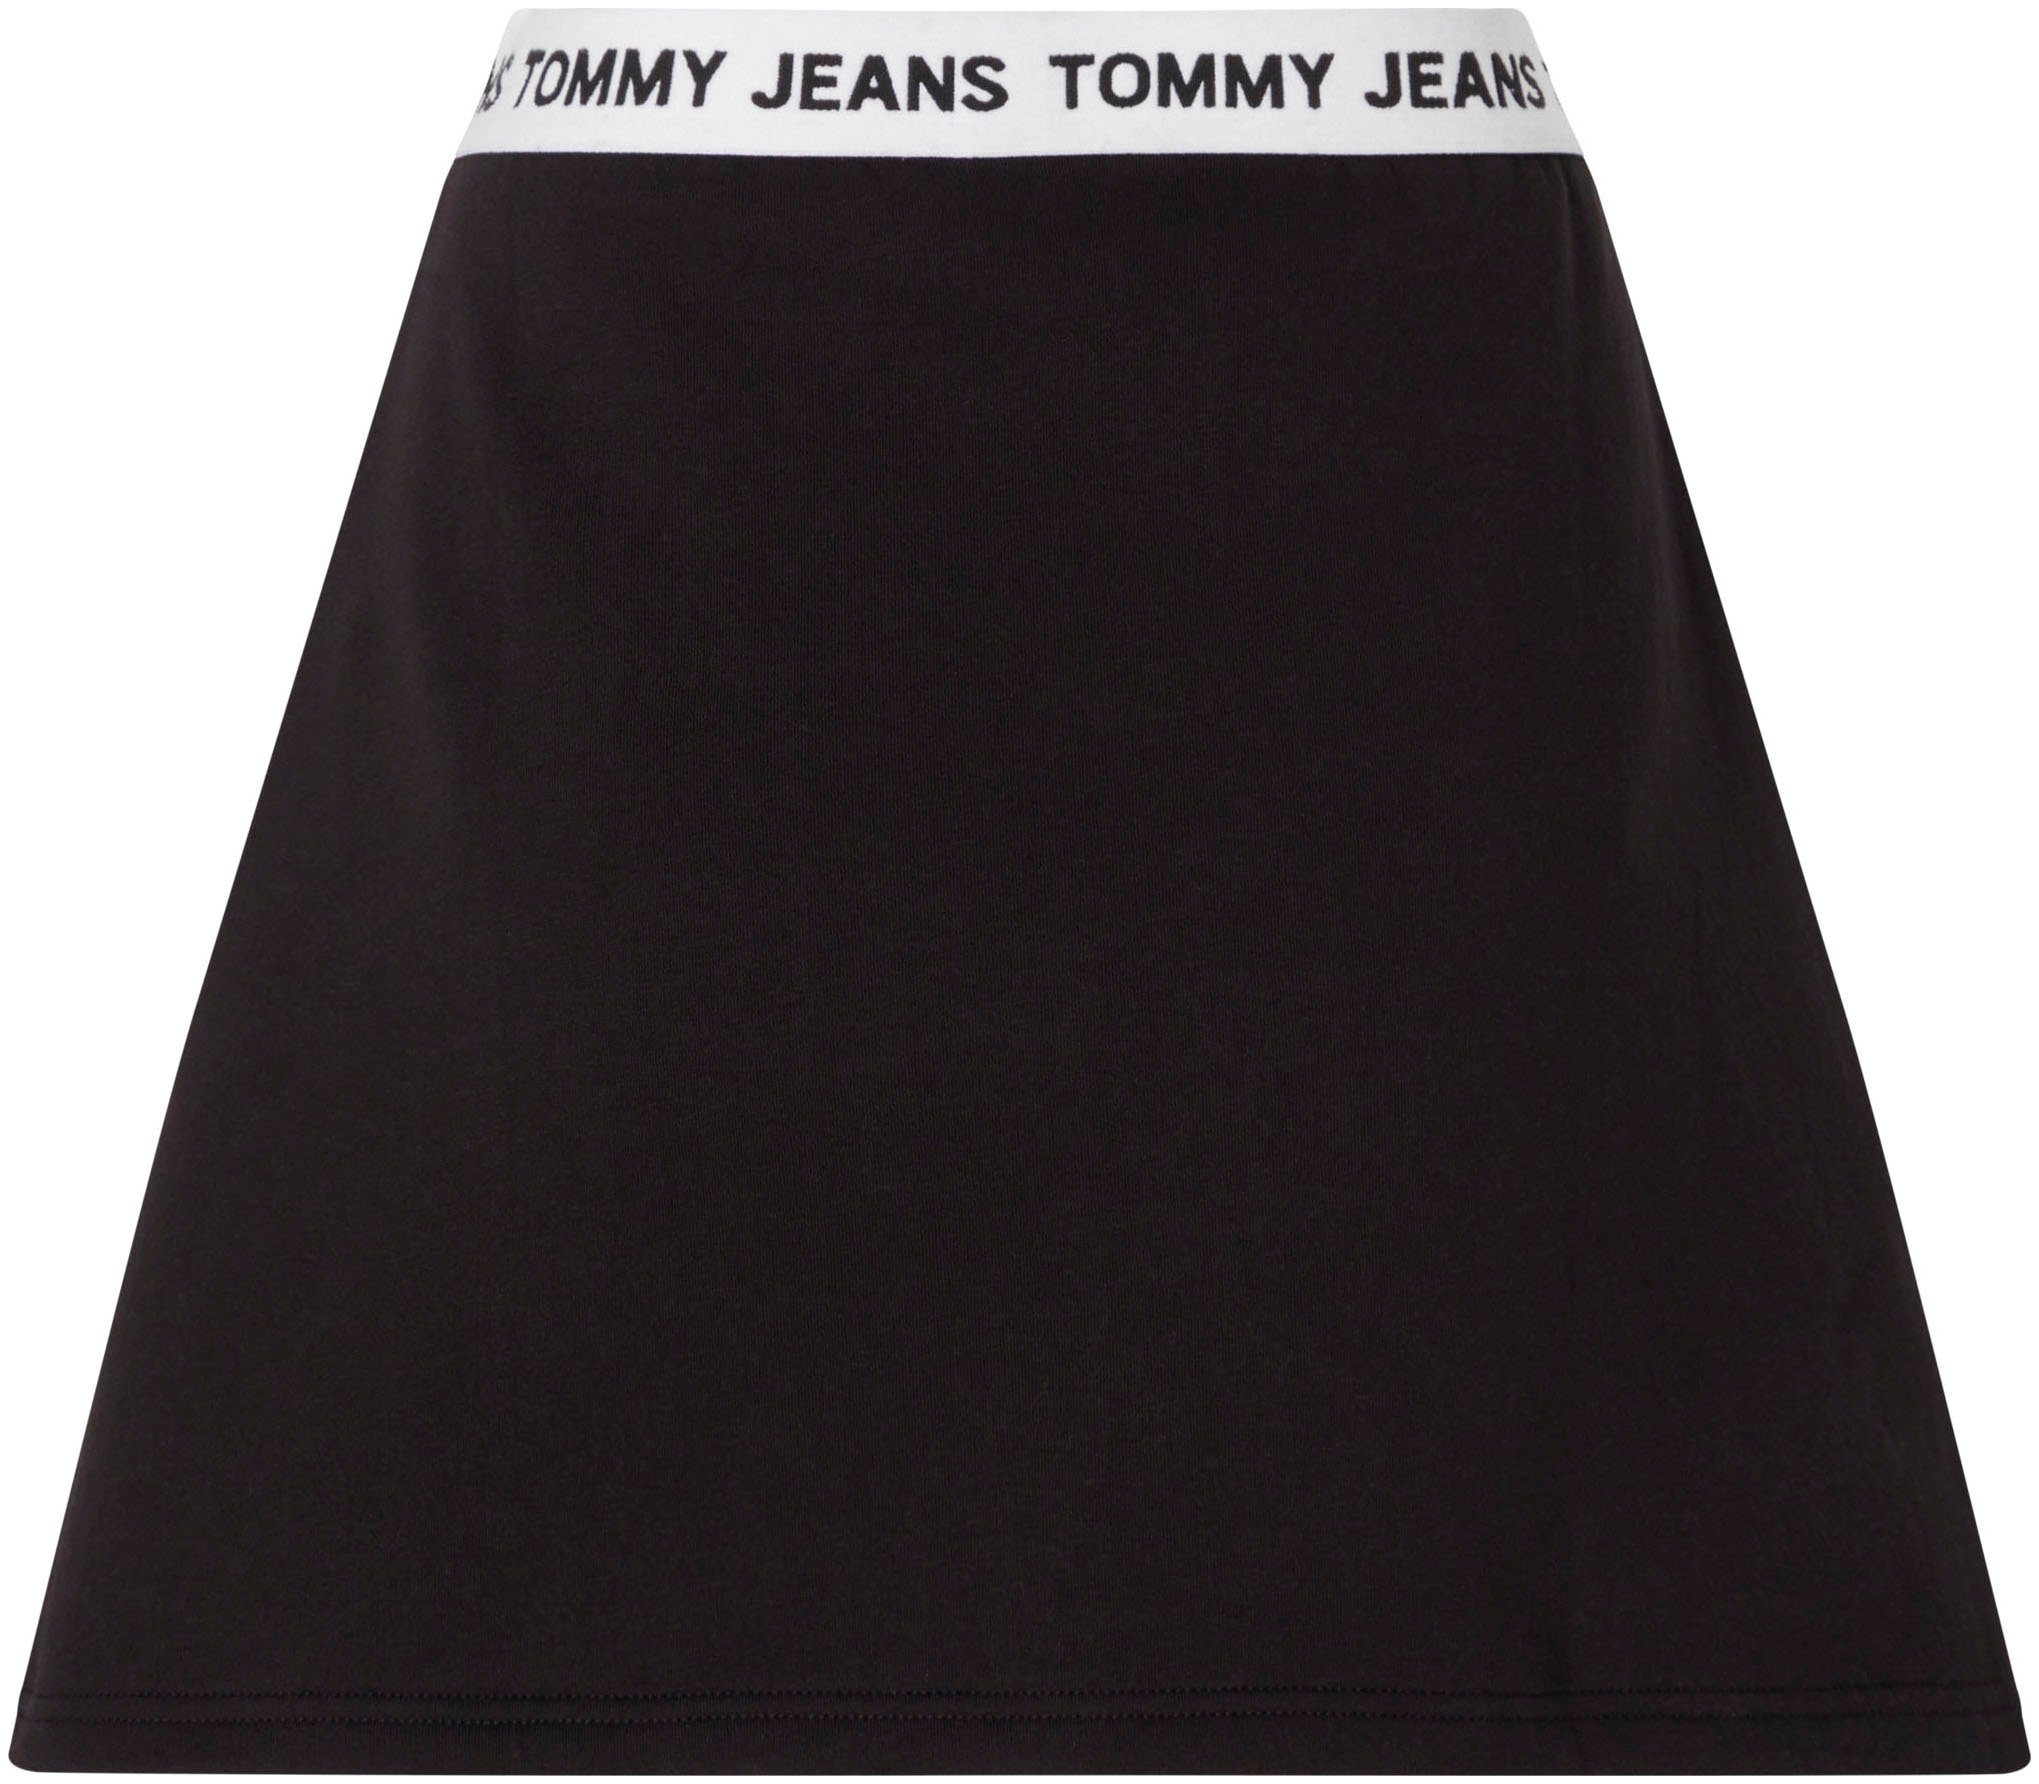 Tommy Jeans Bleistiftrock LOGO Tommy Jeans Waistband TJW Logo-Schriftzug auf mit WAISTBAND SKIRT dem